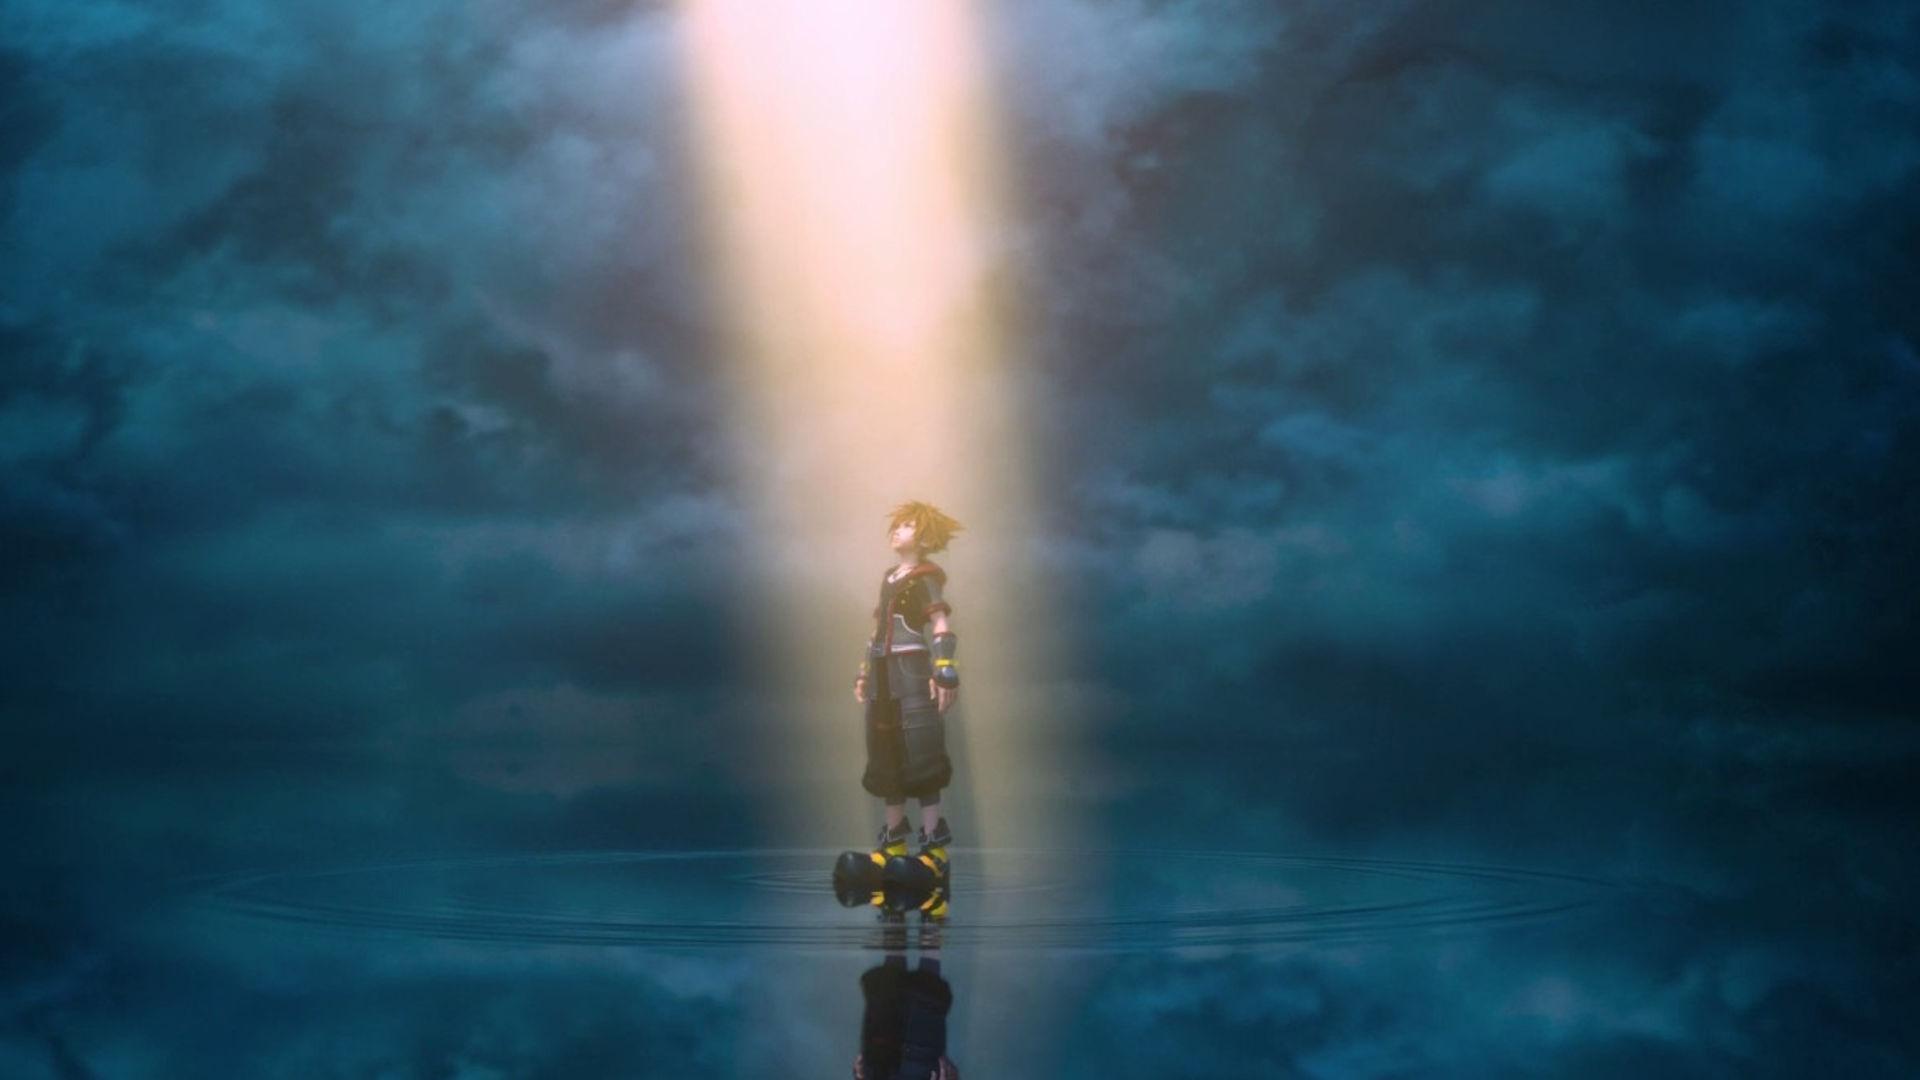 Kingdom Hearts - HD 1.5 + 2.5 ReMix - Cloud Version Review (Switch eShop)